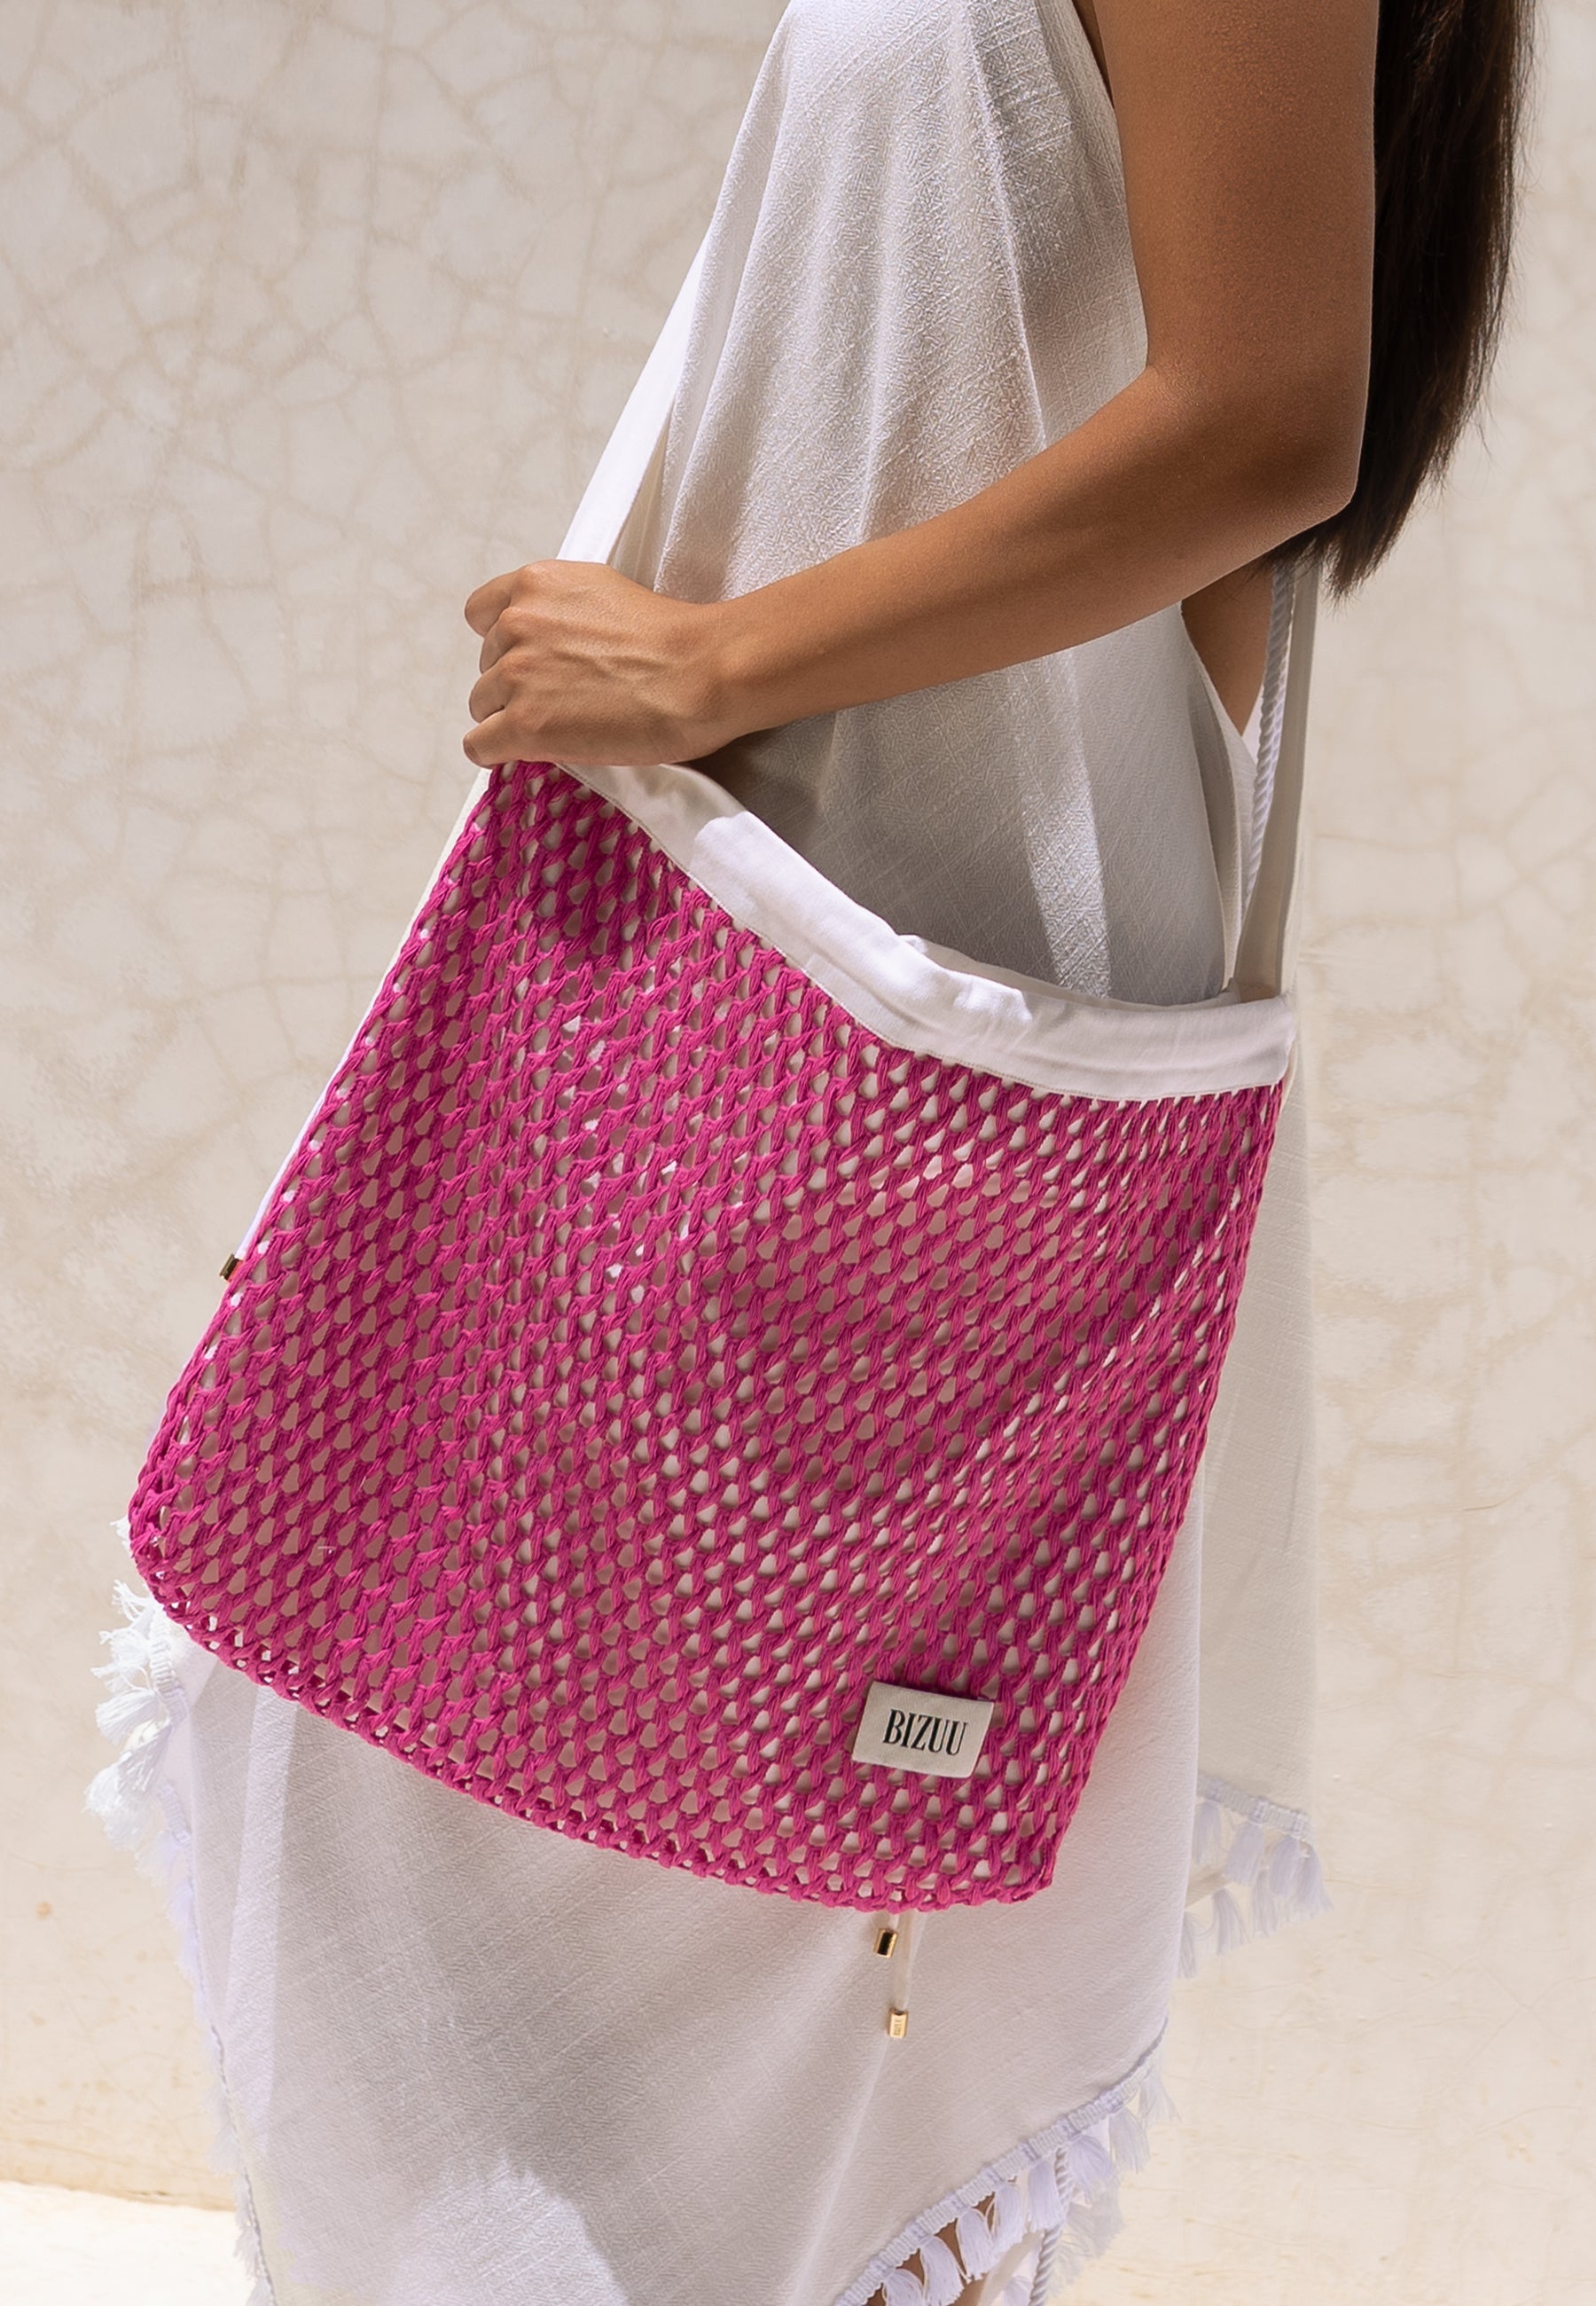 ENNA cotton net bag, pink